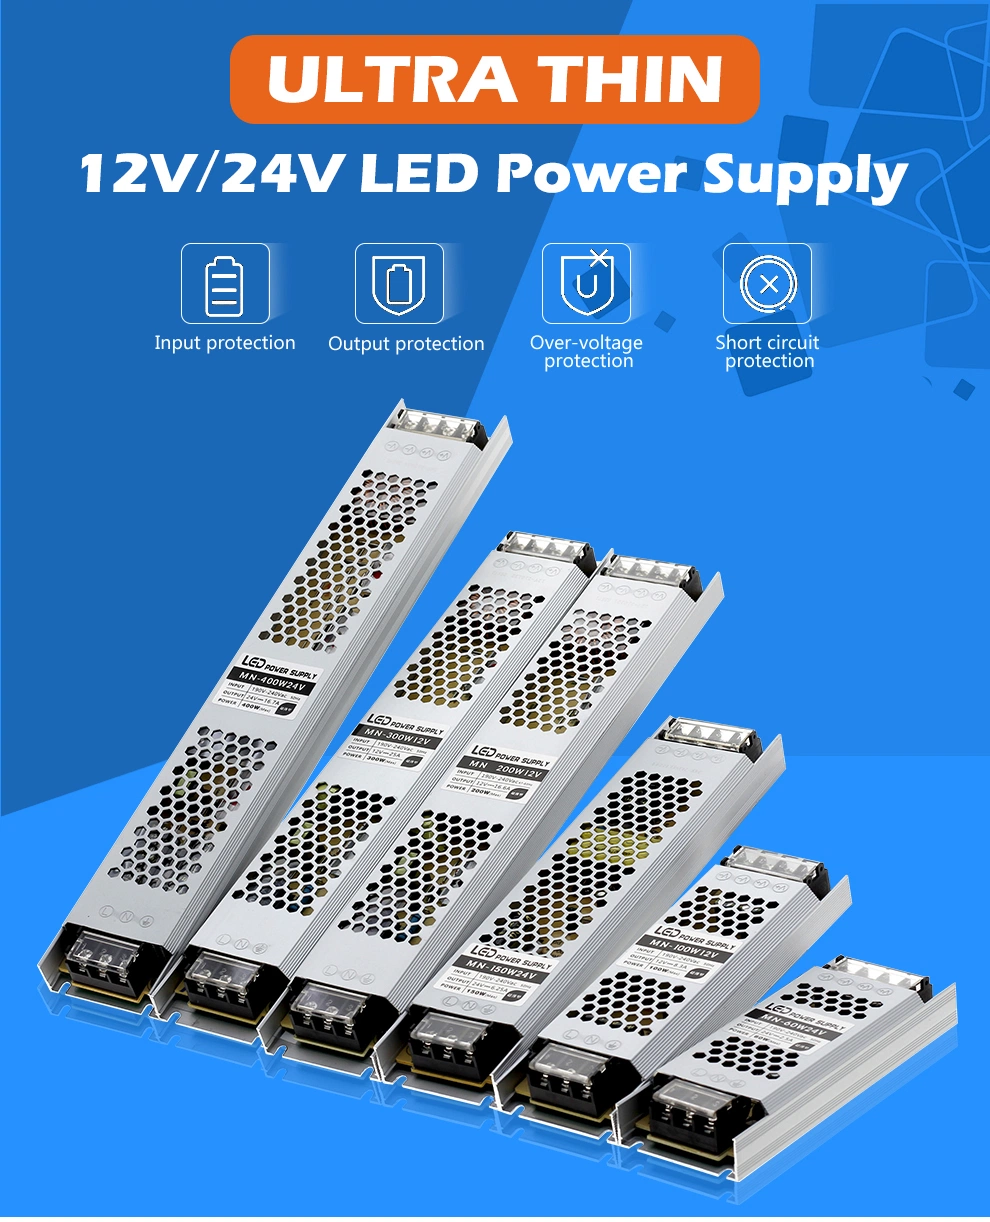 DC 12V 24V Switching Power Supply AC190-240V Mute Lighting Transformers 60W 100W 200W 300W 400W LED Light Driver Power Adapter